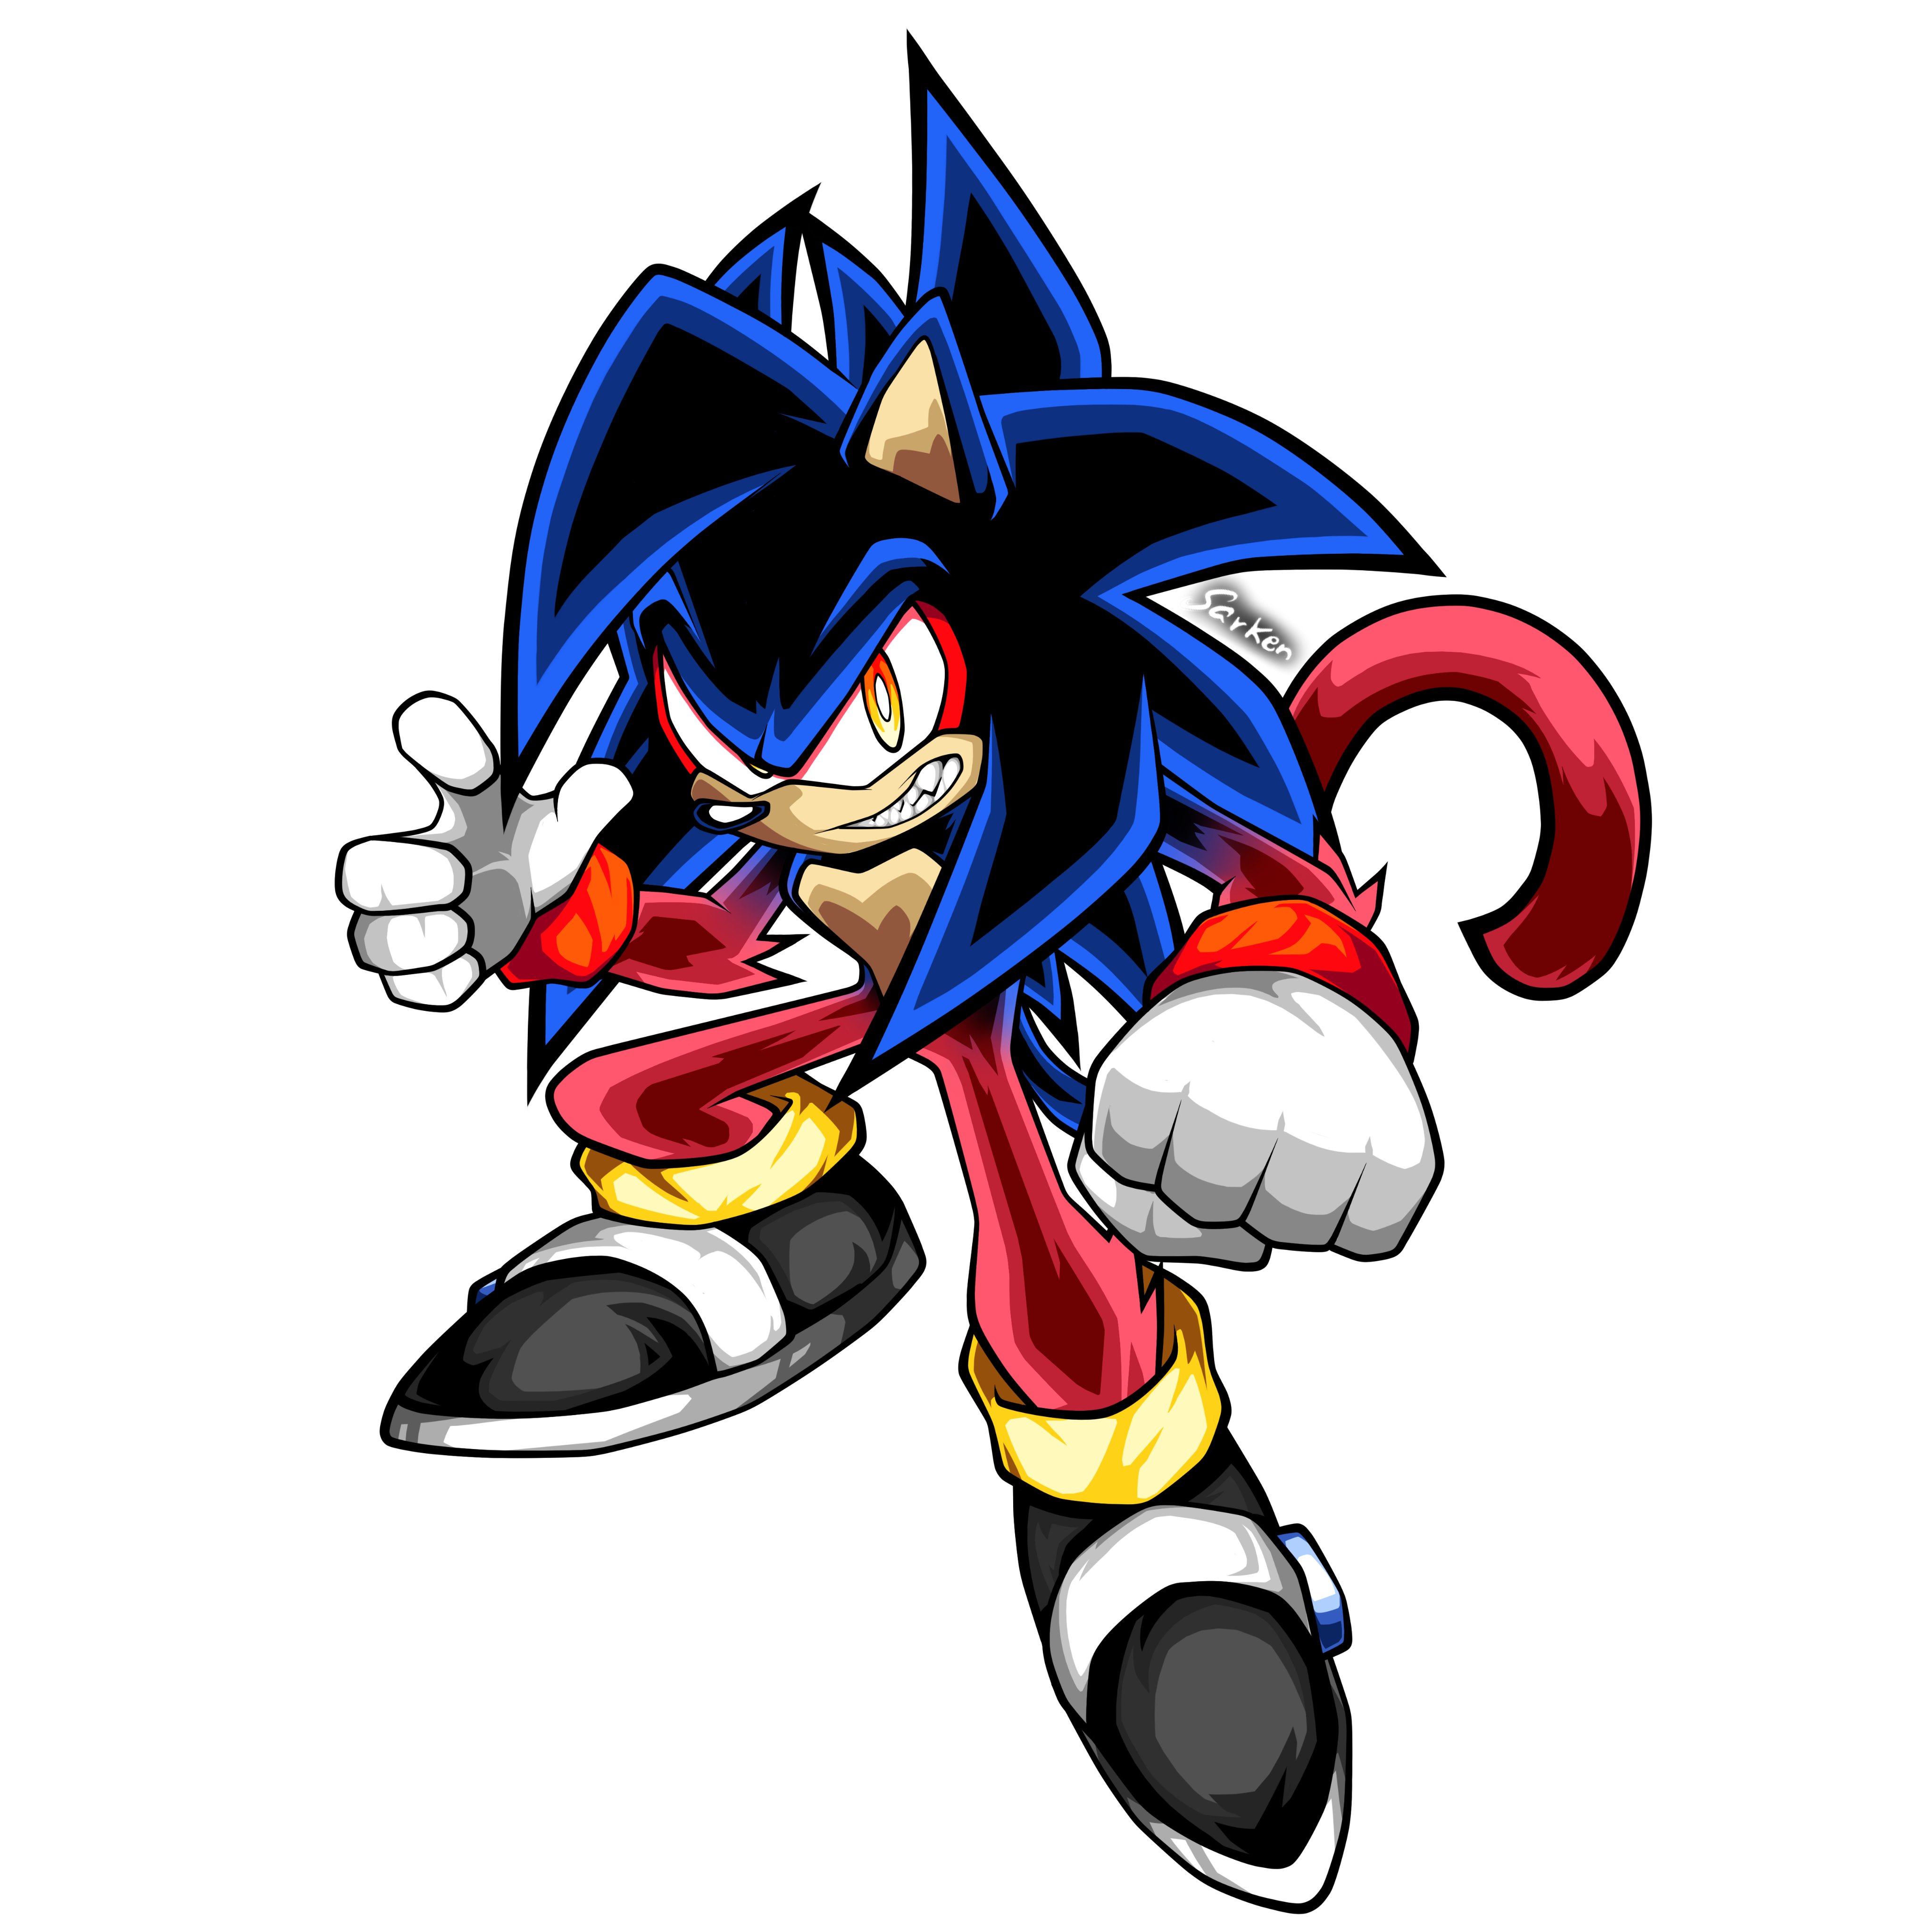 fronkus (COMMS OPEN) on X: Dark Super Sonic #SonicTheHedgehog #SonicX   / X